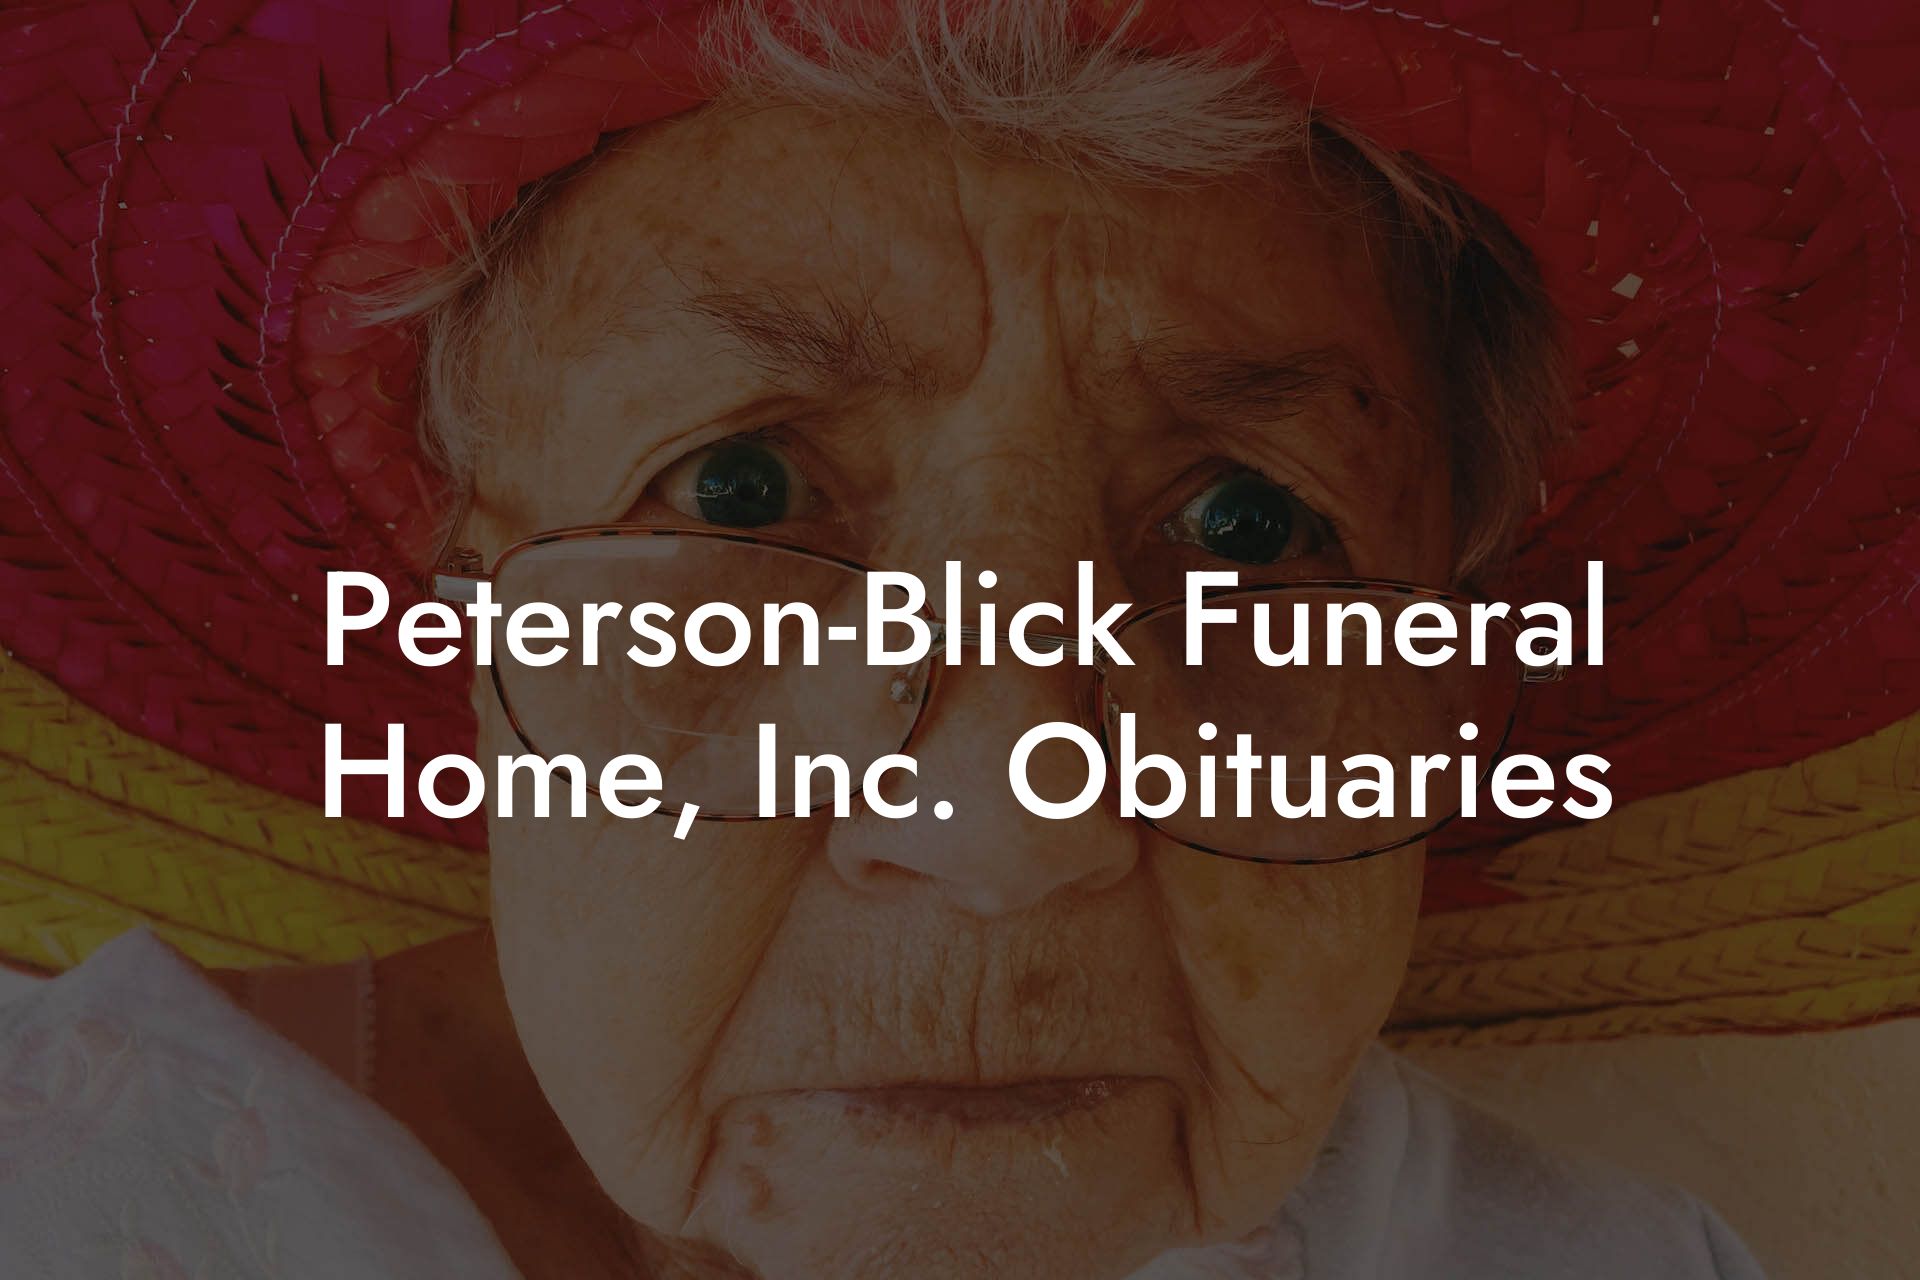 Peterson-Blick Funeral Home, Inc. Obituaries